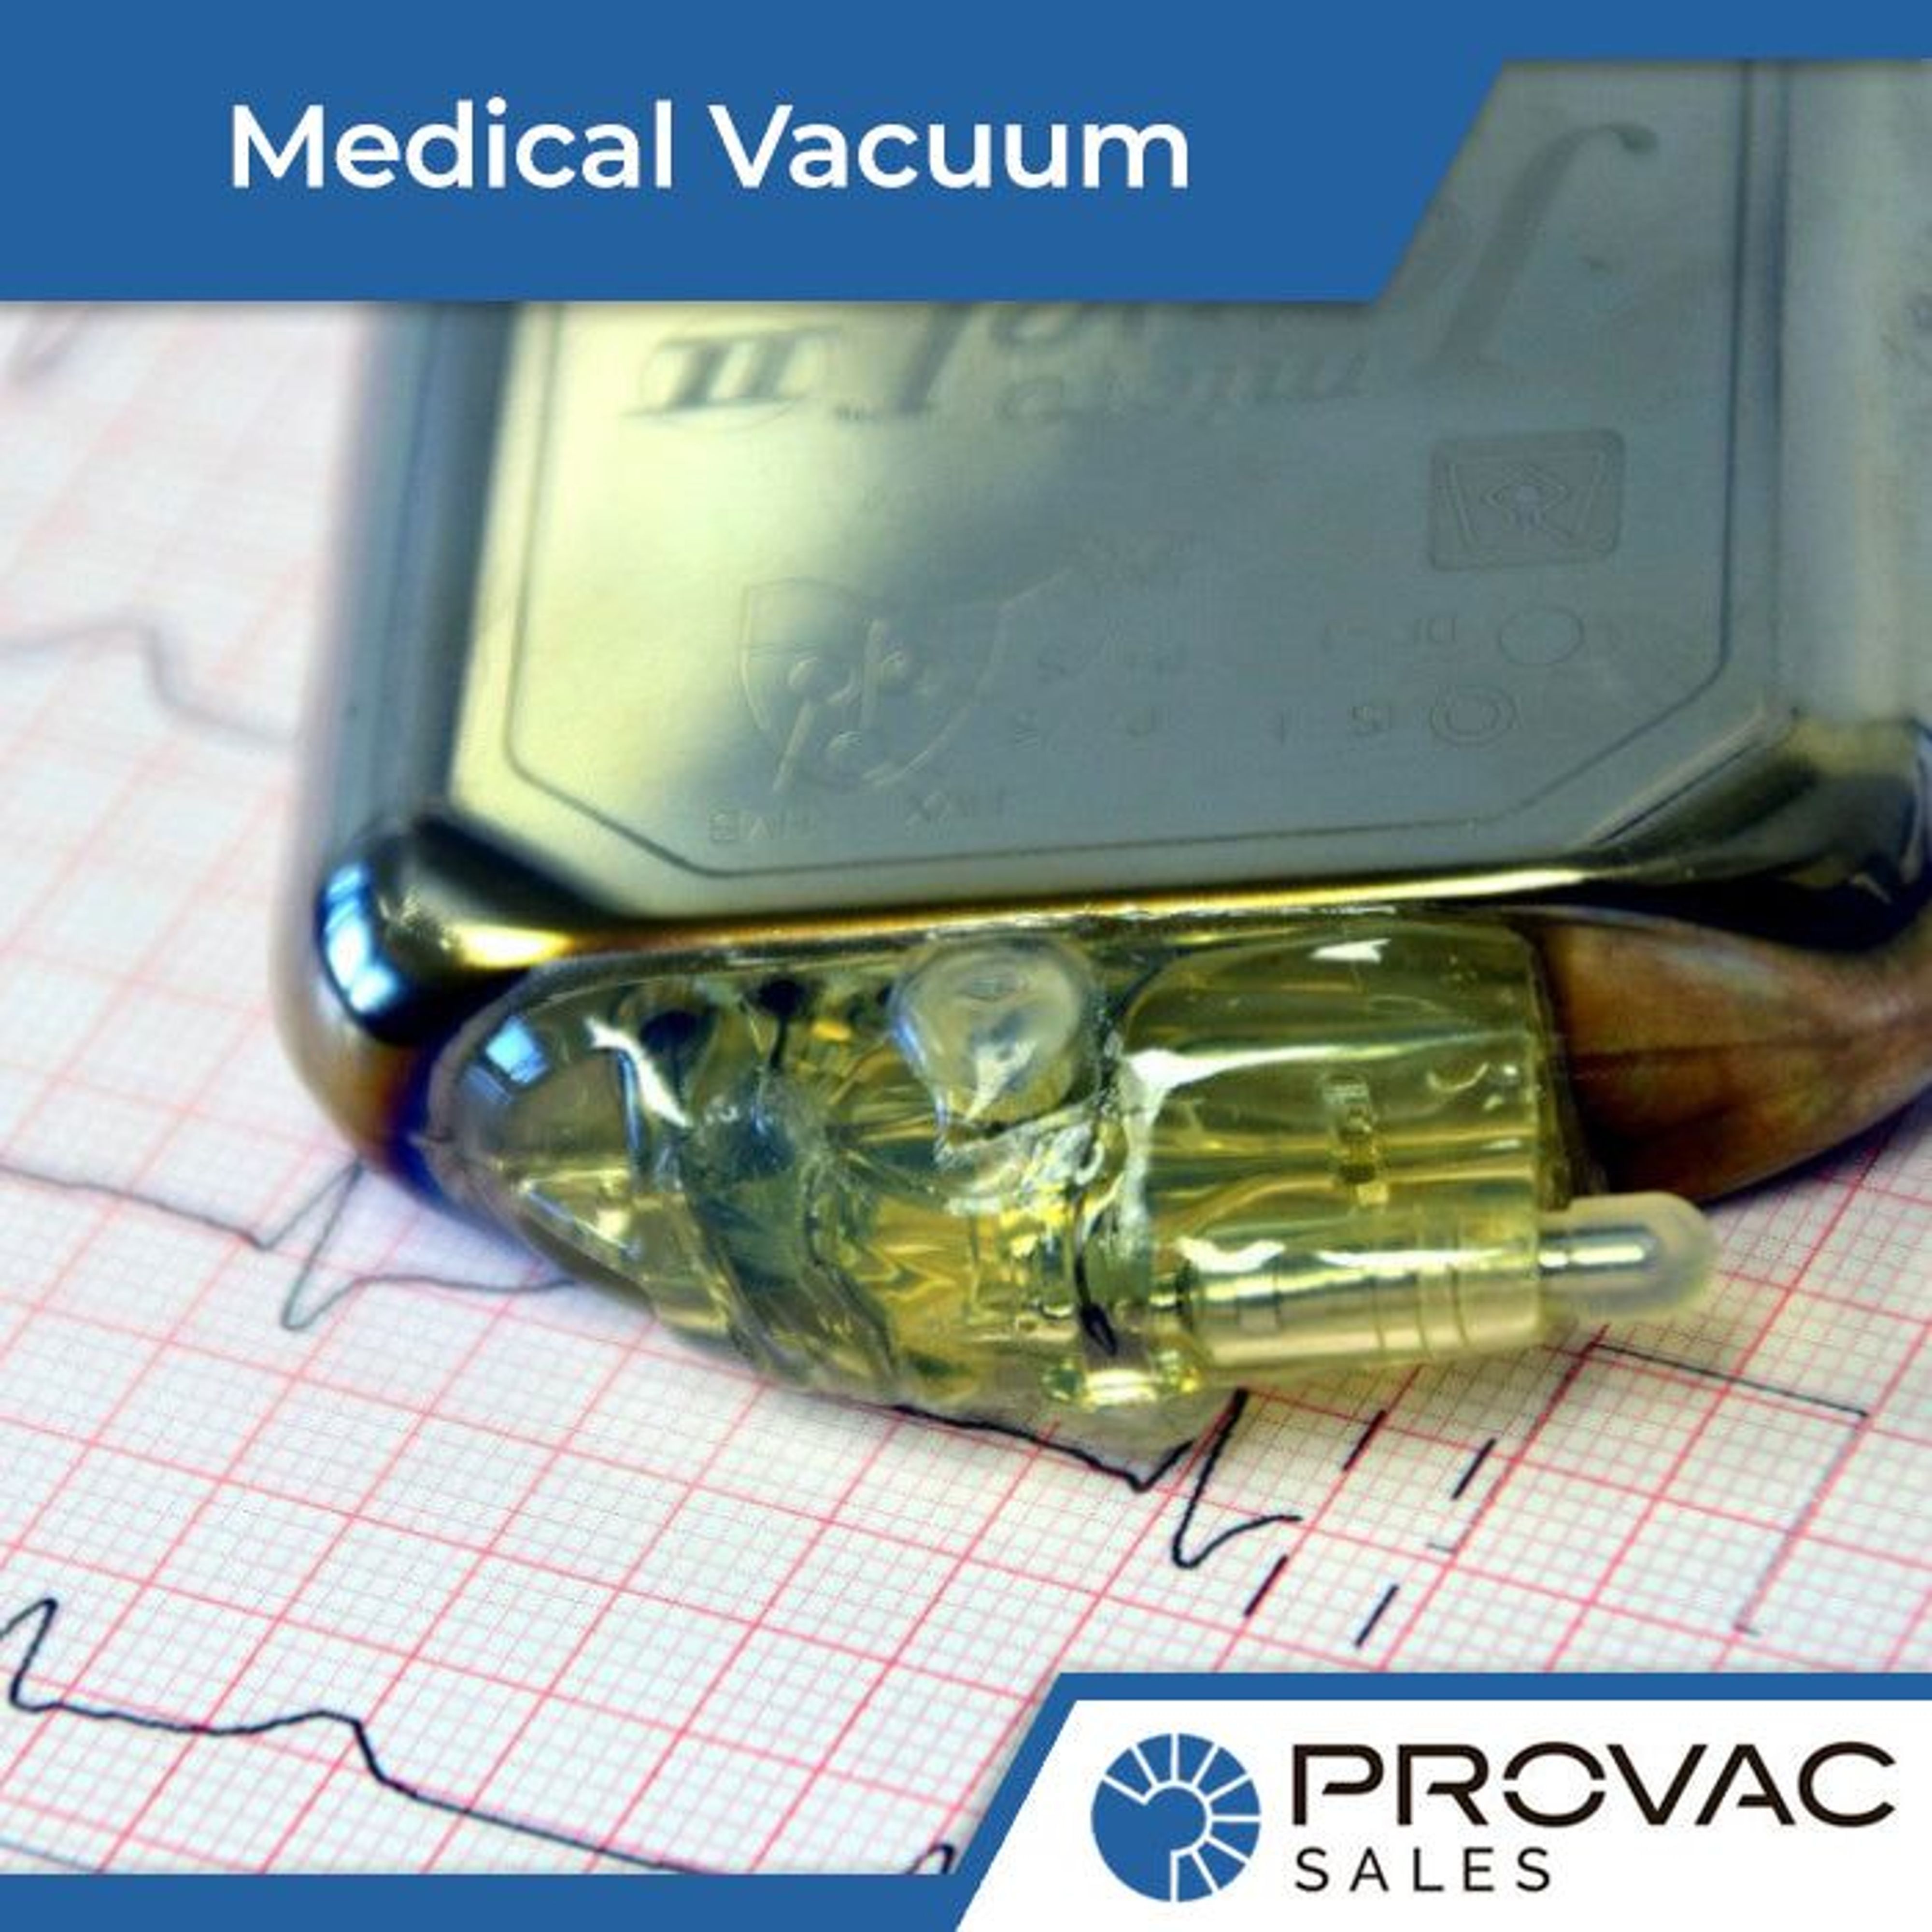 Medical Vacuum Pumps Background